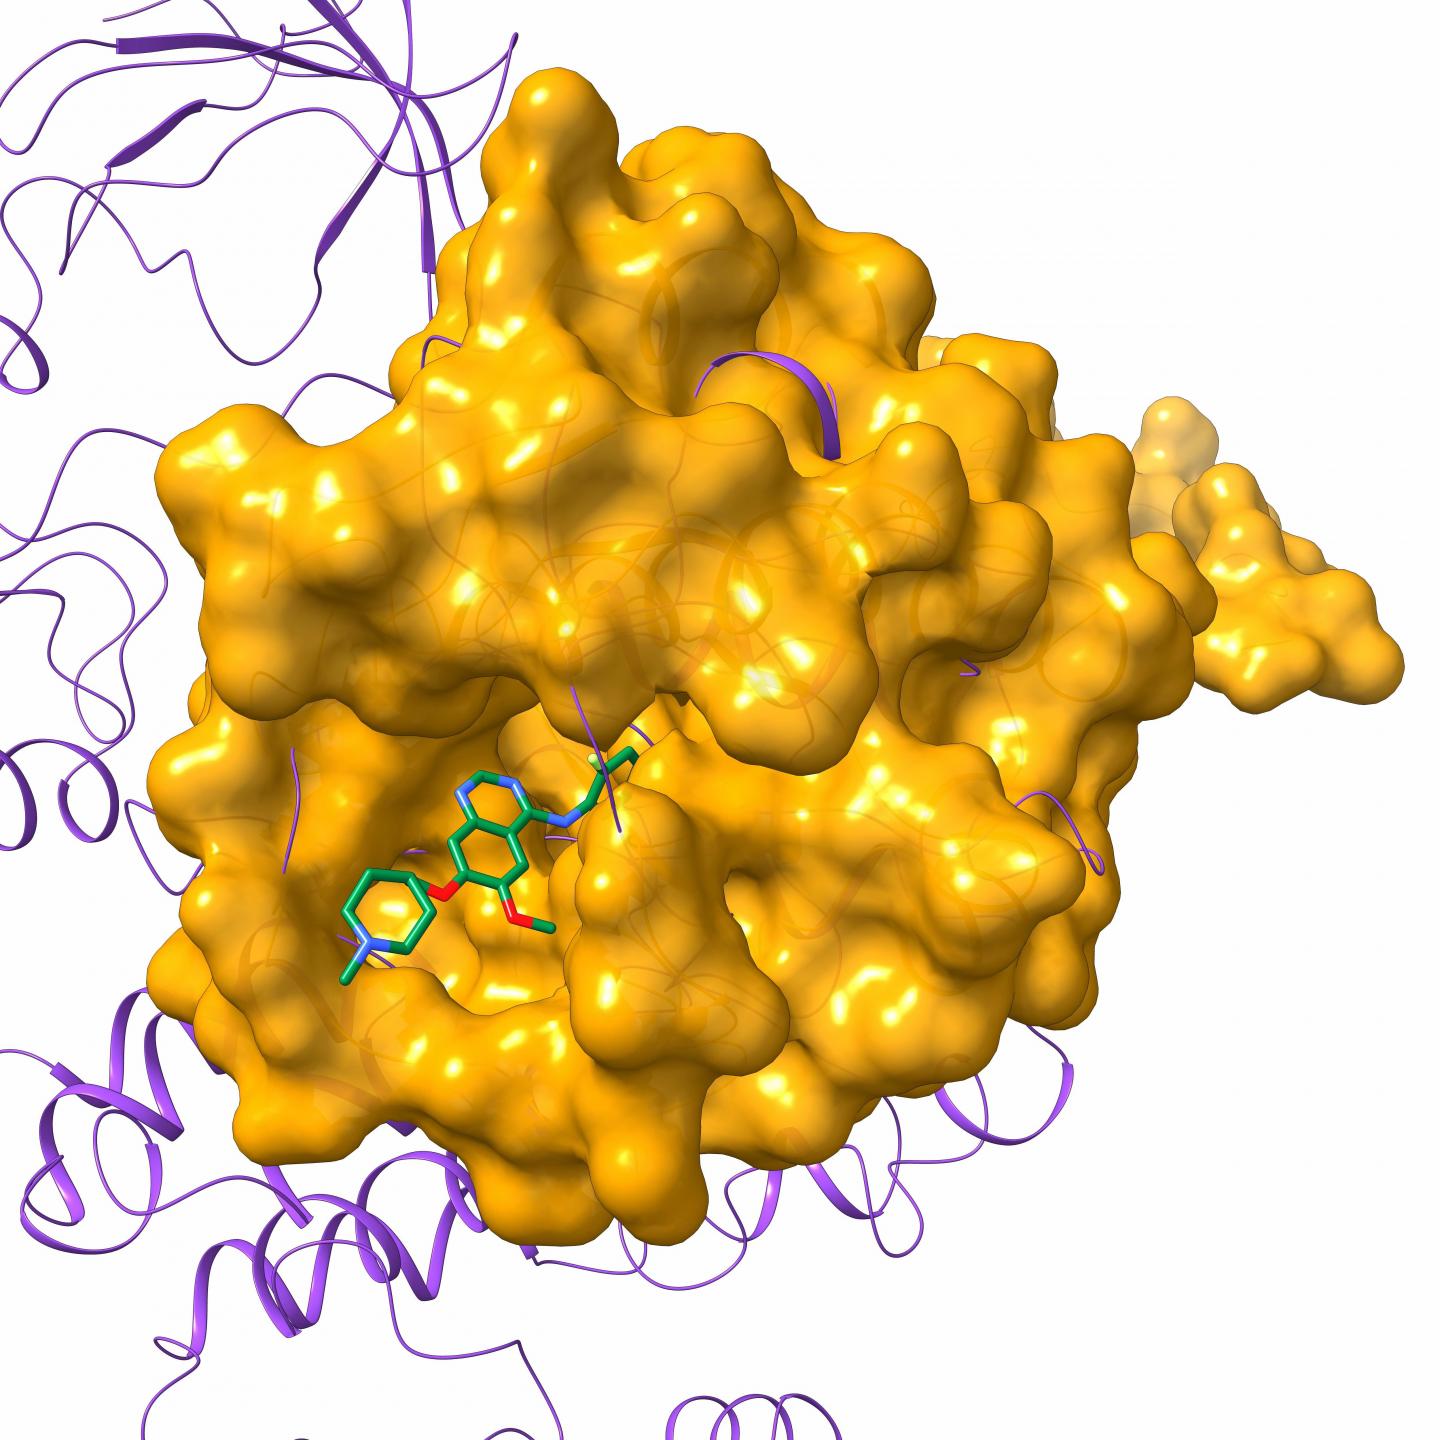 Chemotherapeutic Vandetanib Bound to Protein Tyrosine Kinase 6